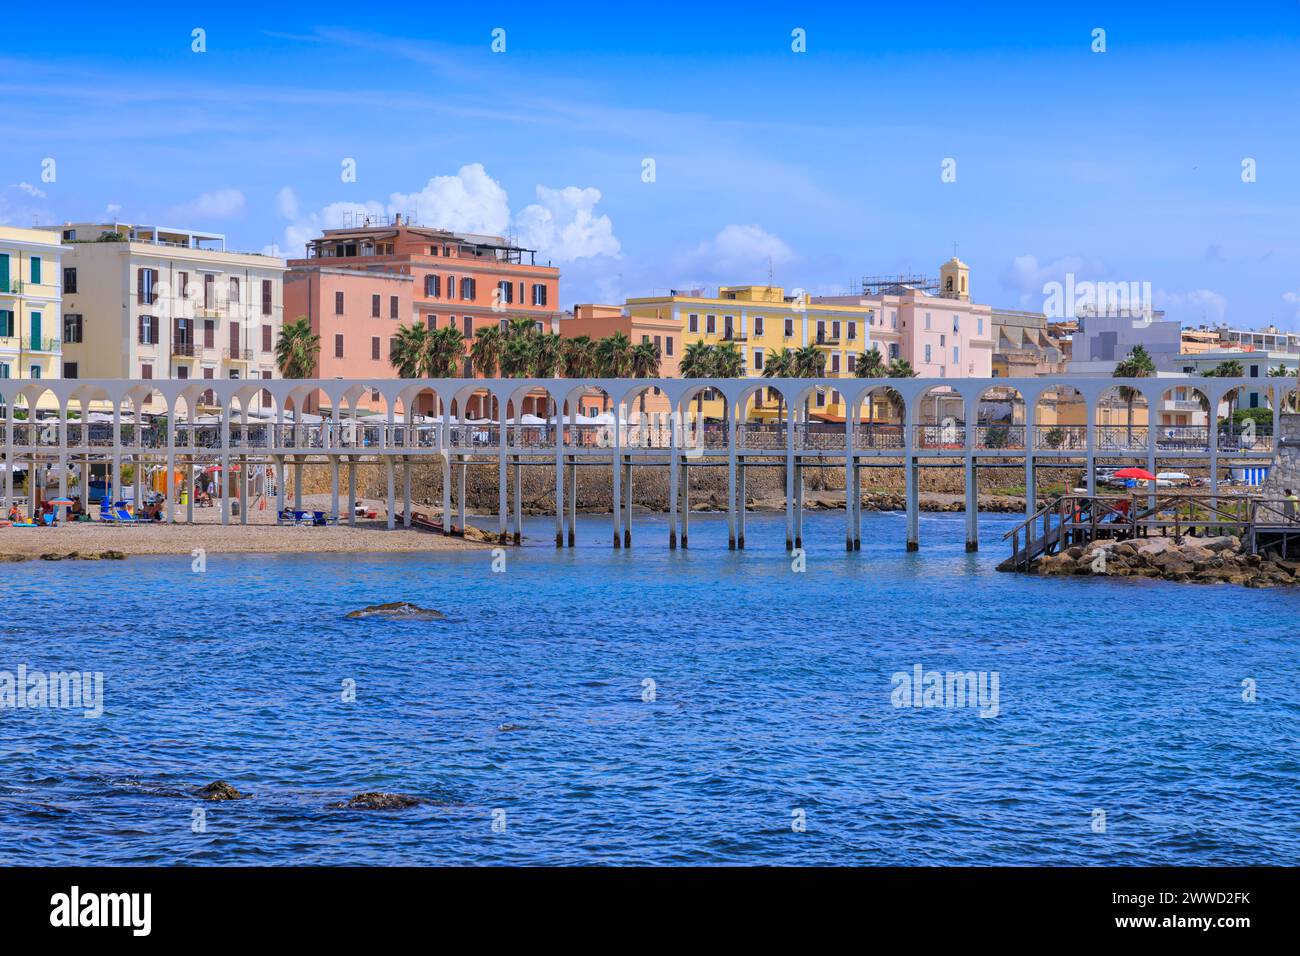 Cityscape of Civitavecchia in Italy: view of Pirgo beach with its pedestrian bridge. Stock Photo